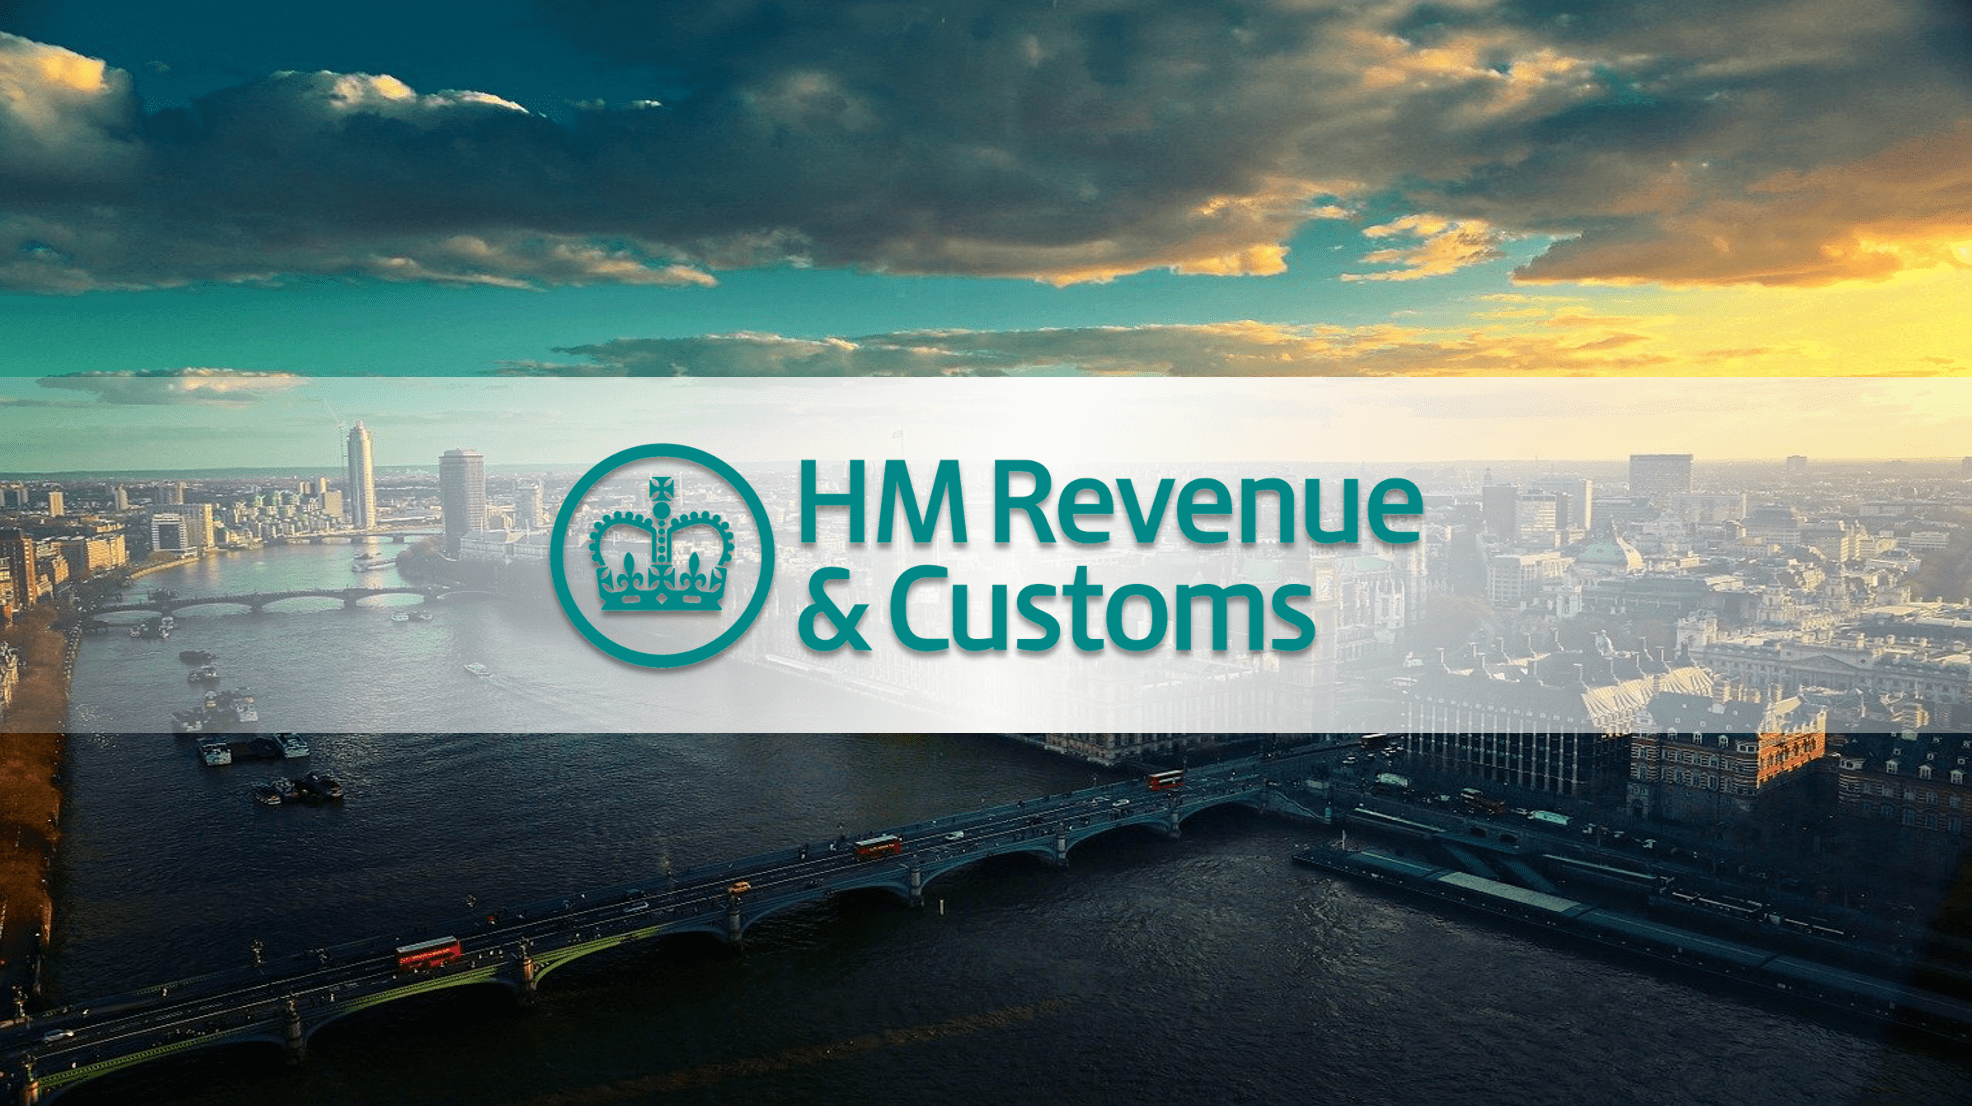 hmrc-smishing-tax-scam-targets-uk-banking-customers-privacy-ninja